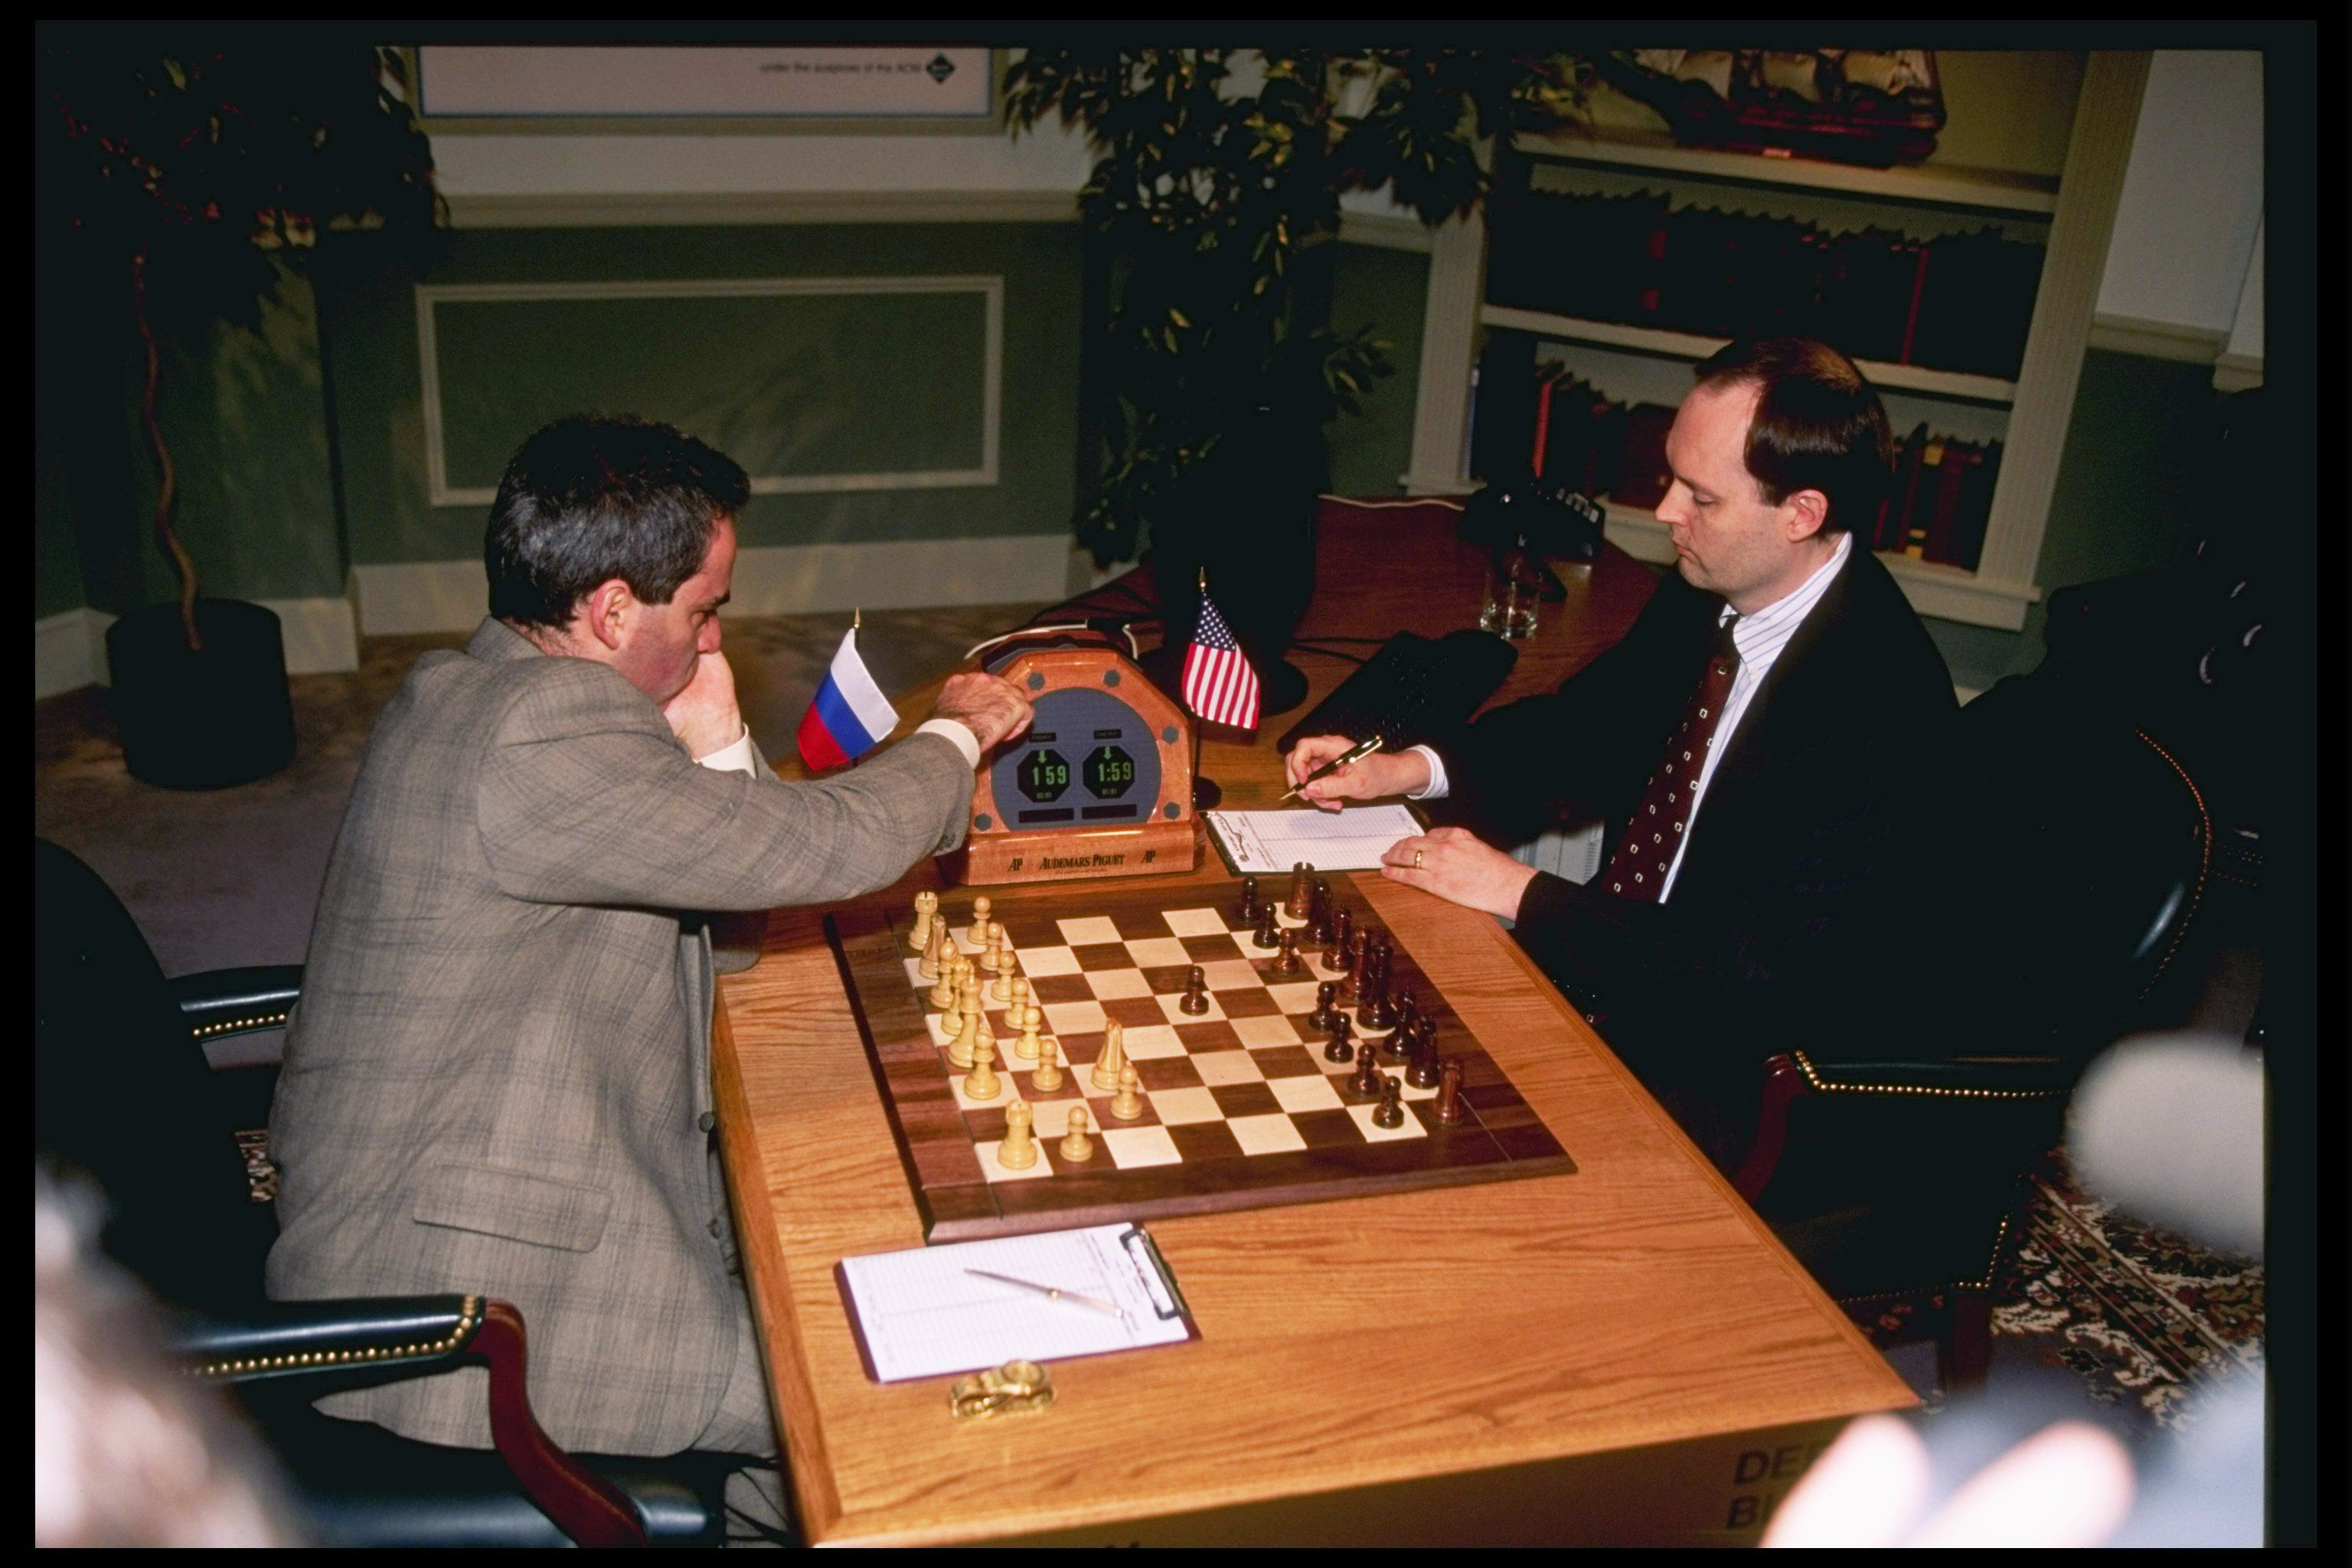 Garry Kasparov vs Deep Blue